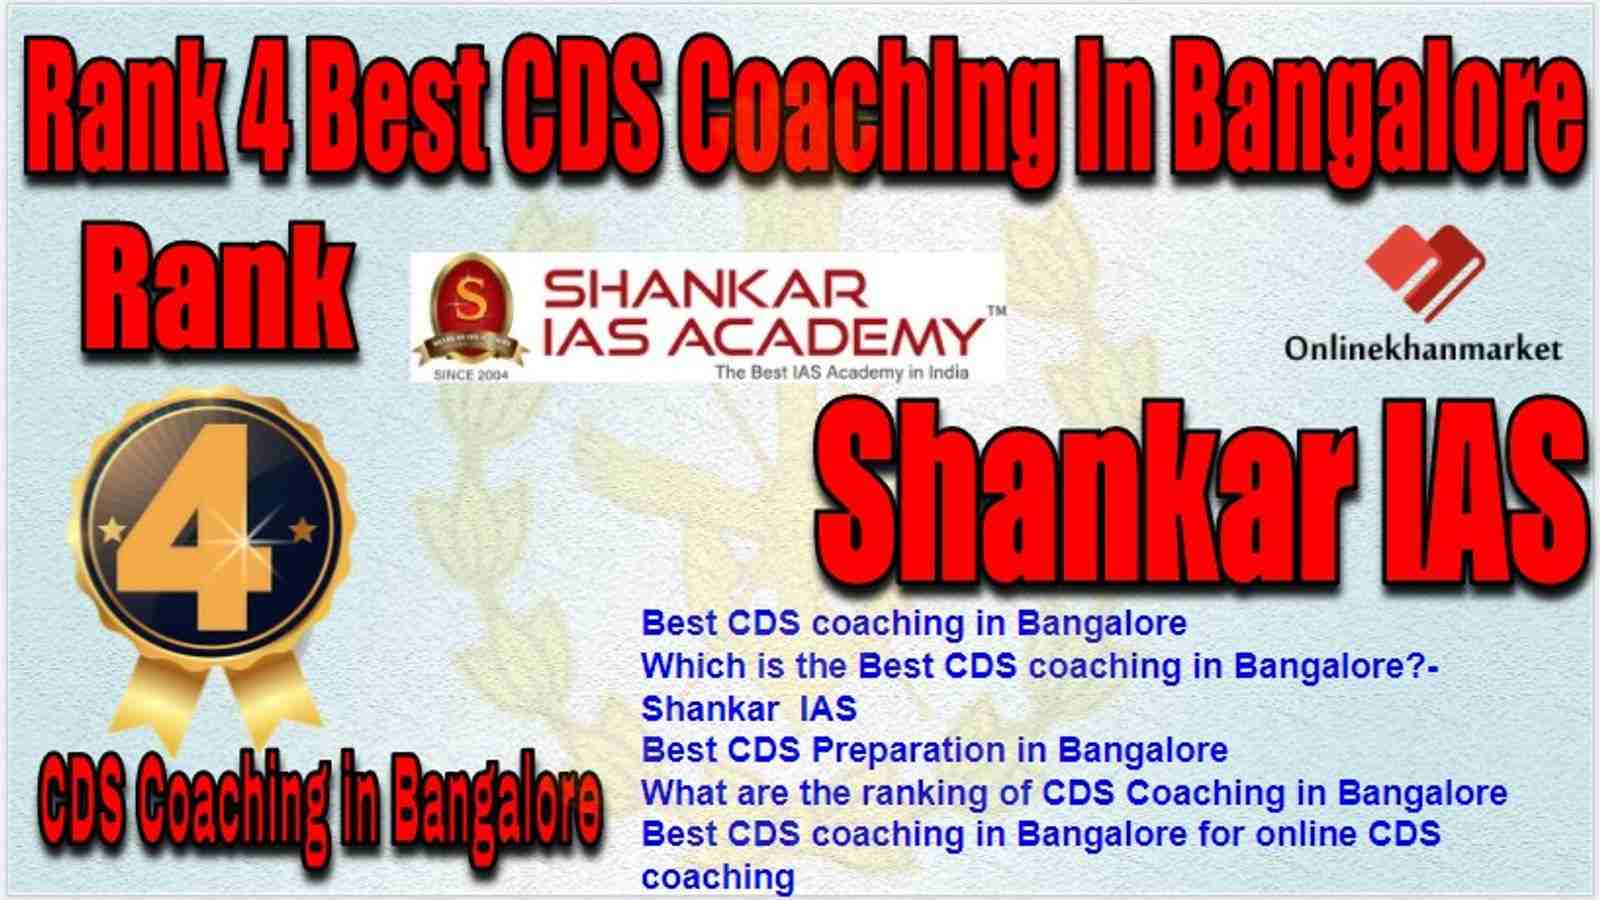 Rank 4 Best CDS Coaching in bangalore